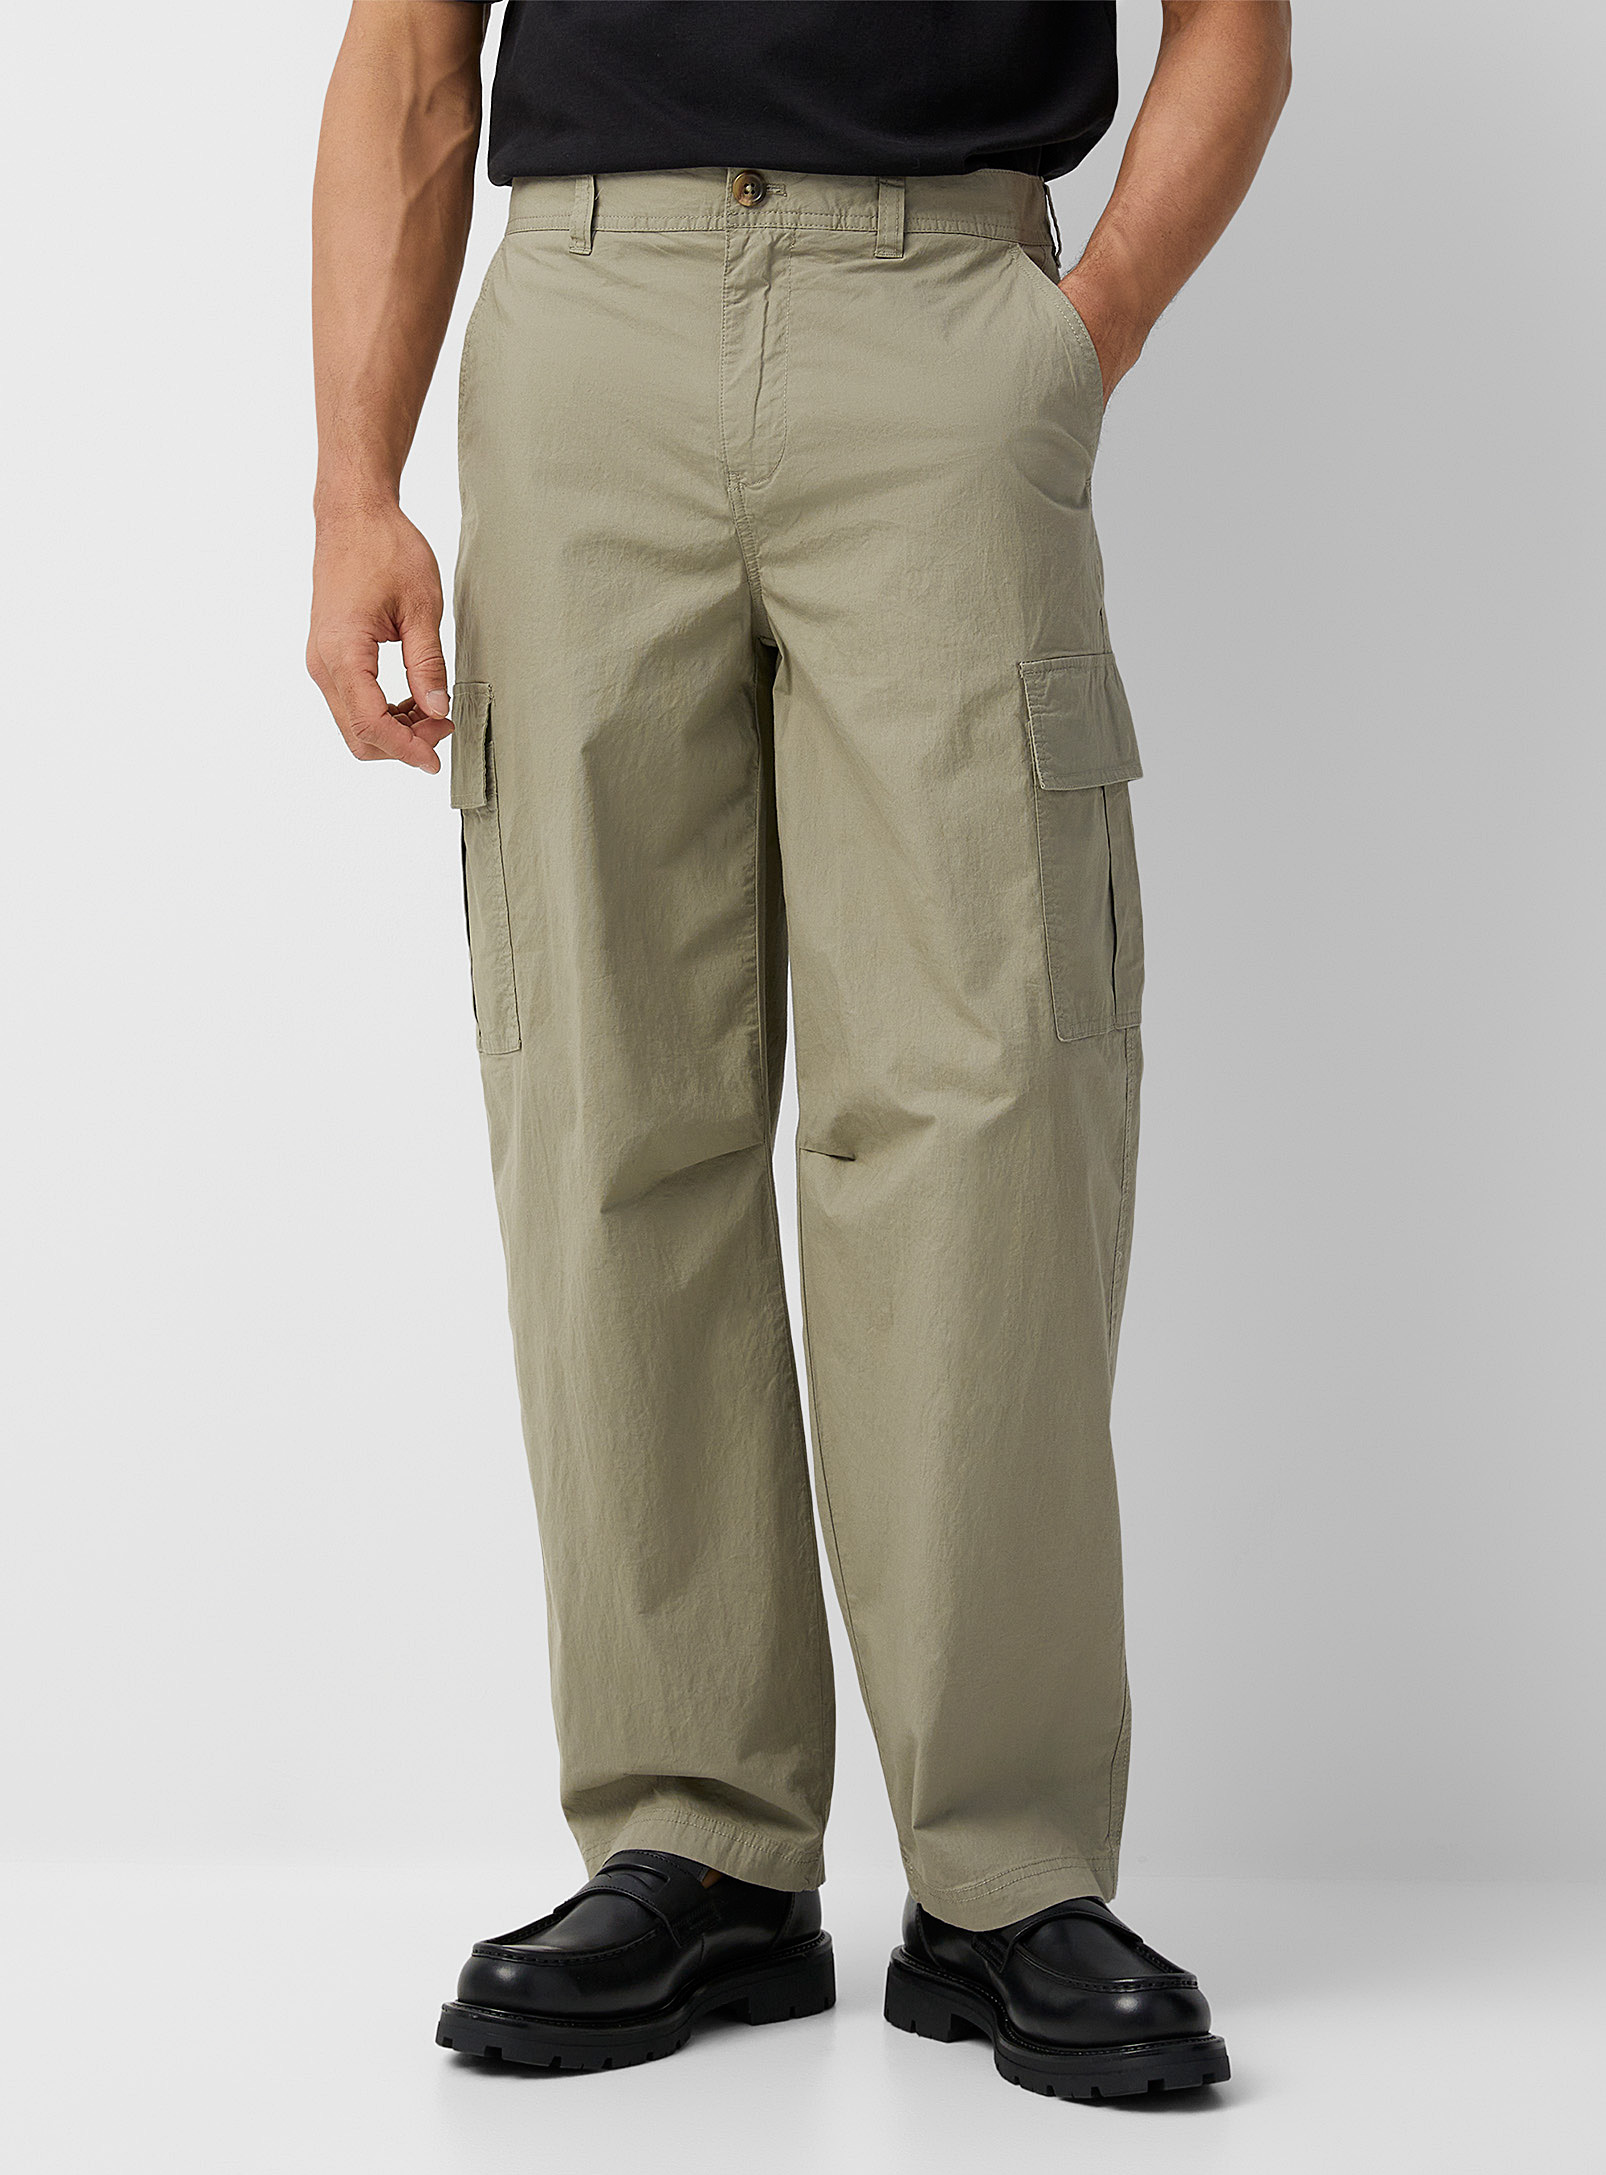 Selected - Le pantalon popeline poches cargo